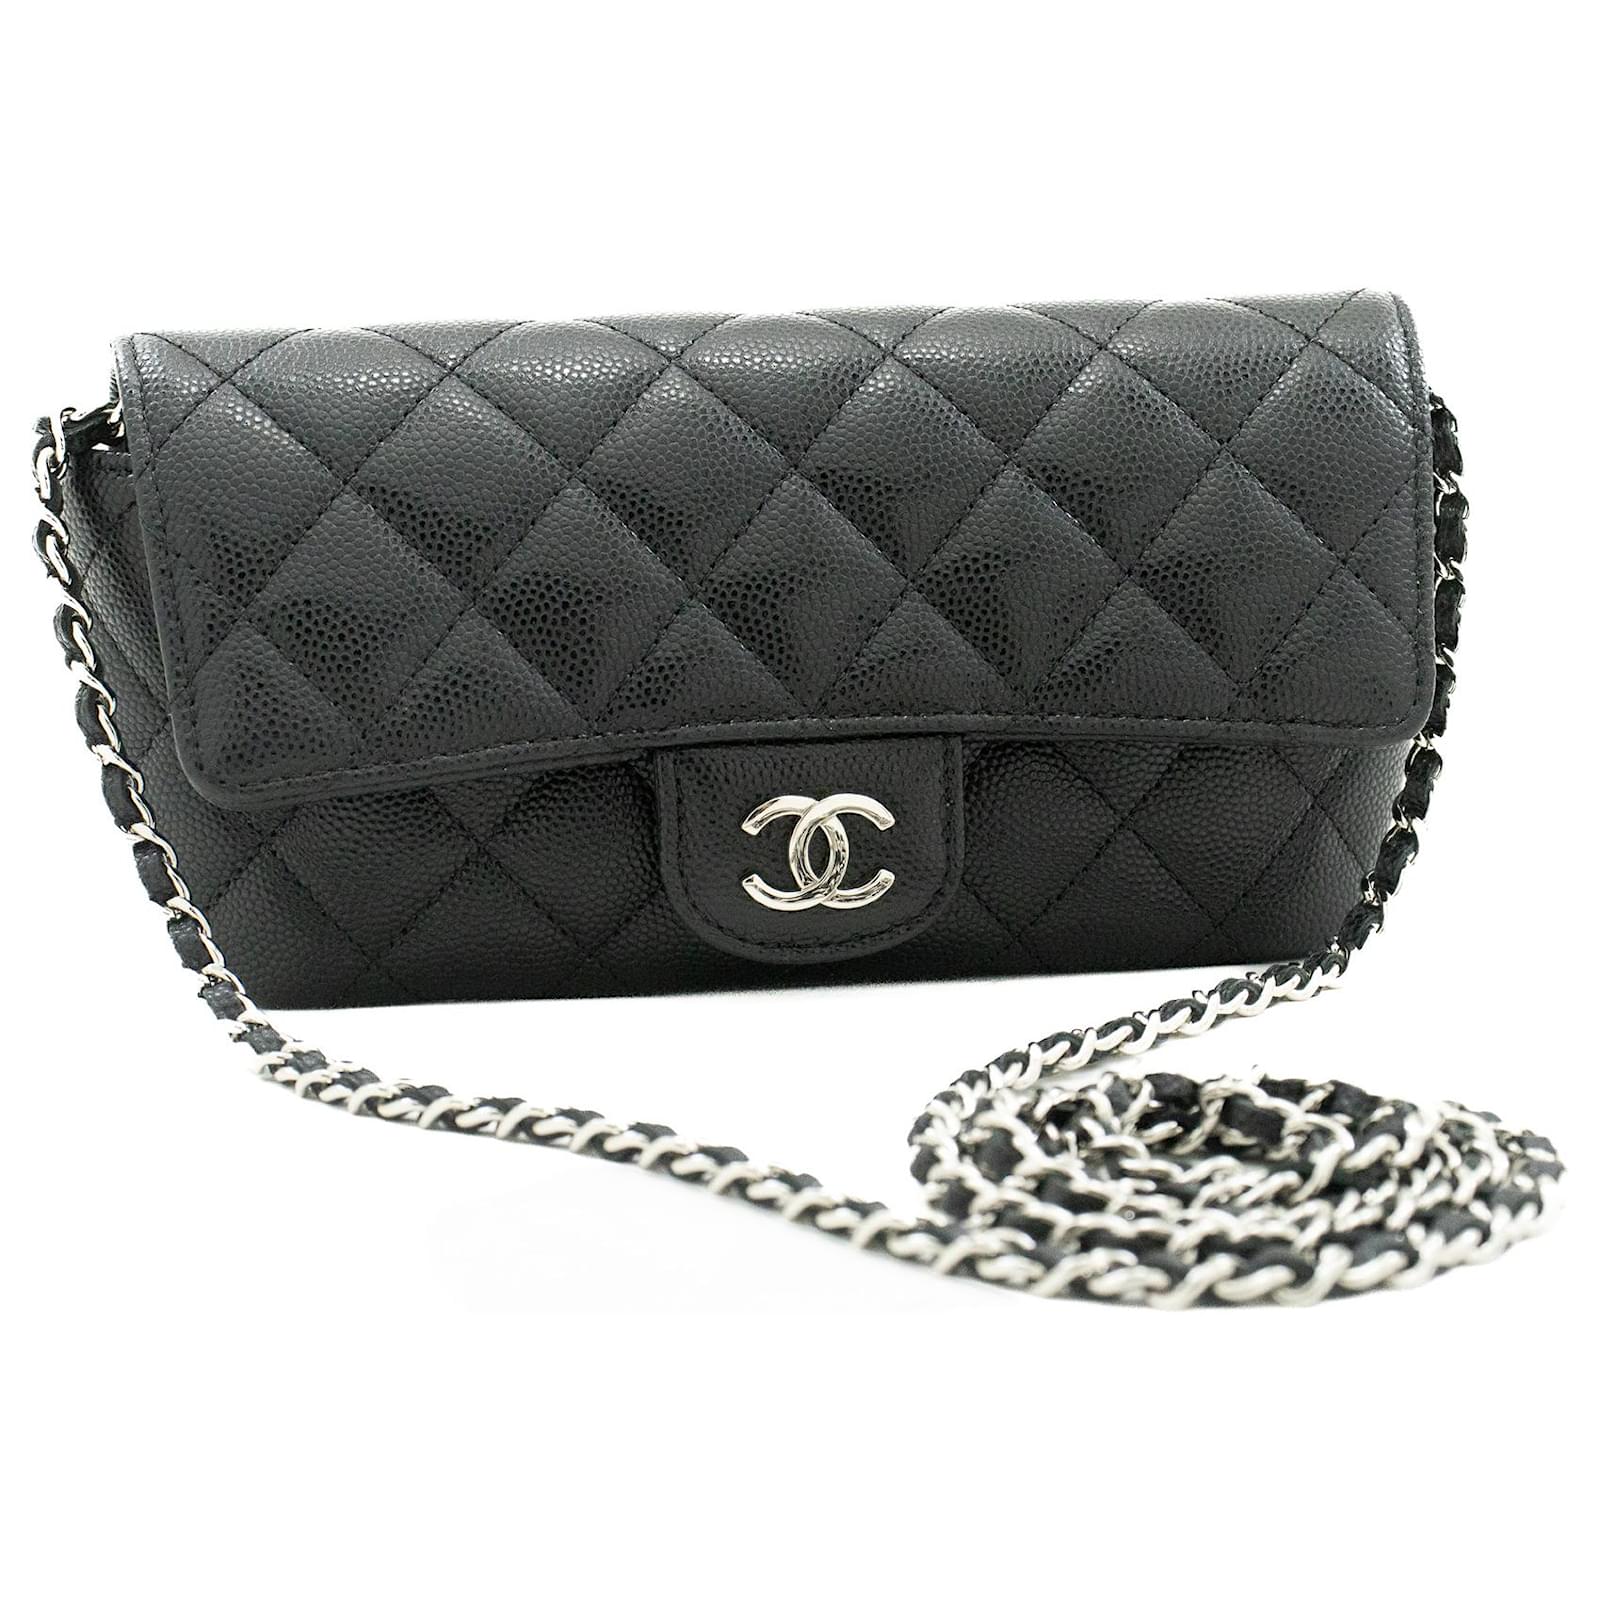 Handbags Chanel Chanel Flap Phone Holder with Chain Bag Black Crossbody Clutch